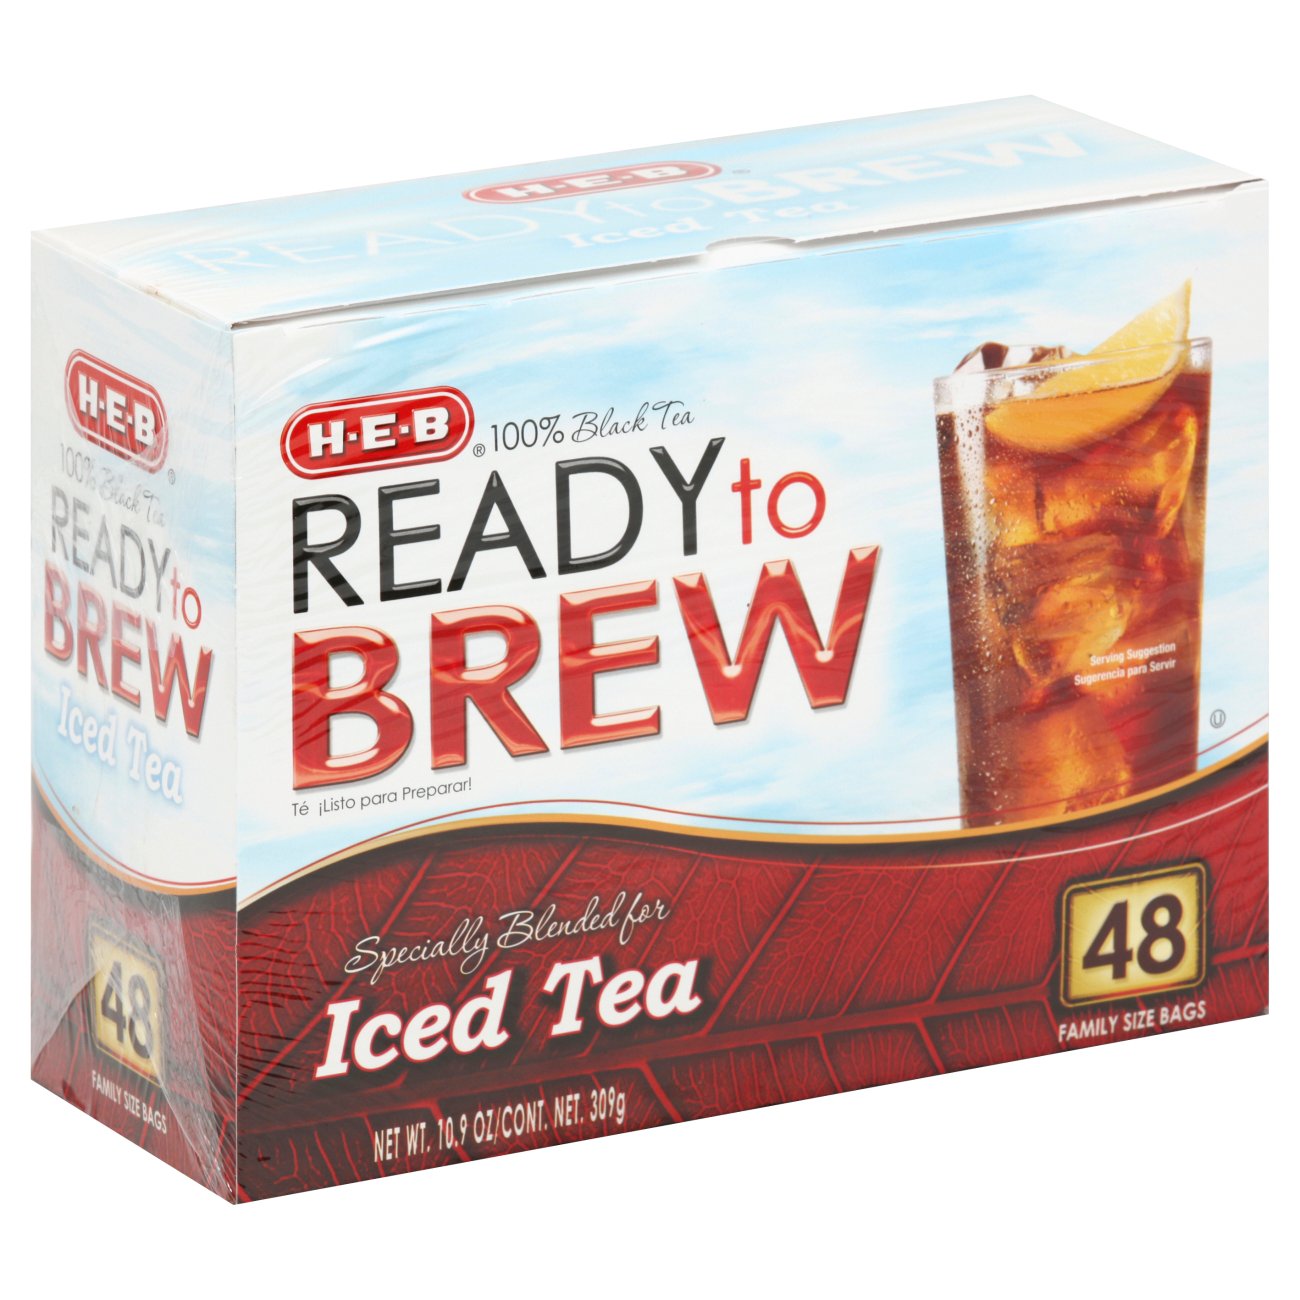 How to Brew Iced Tea